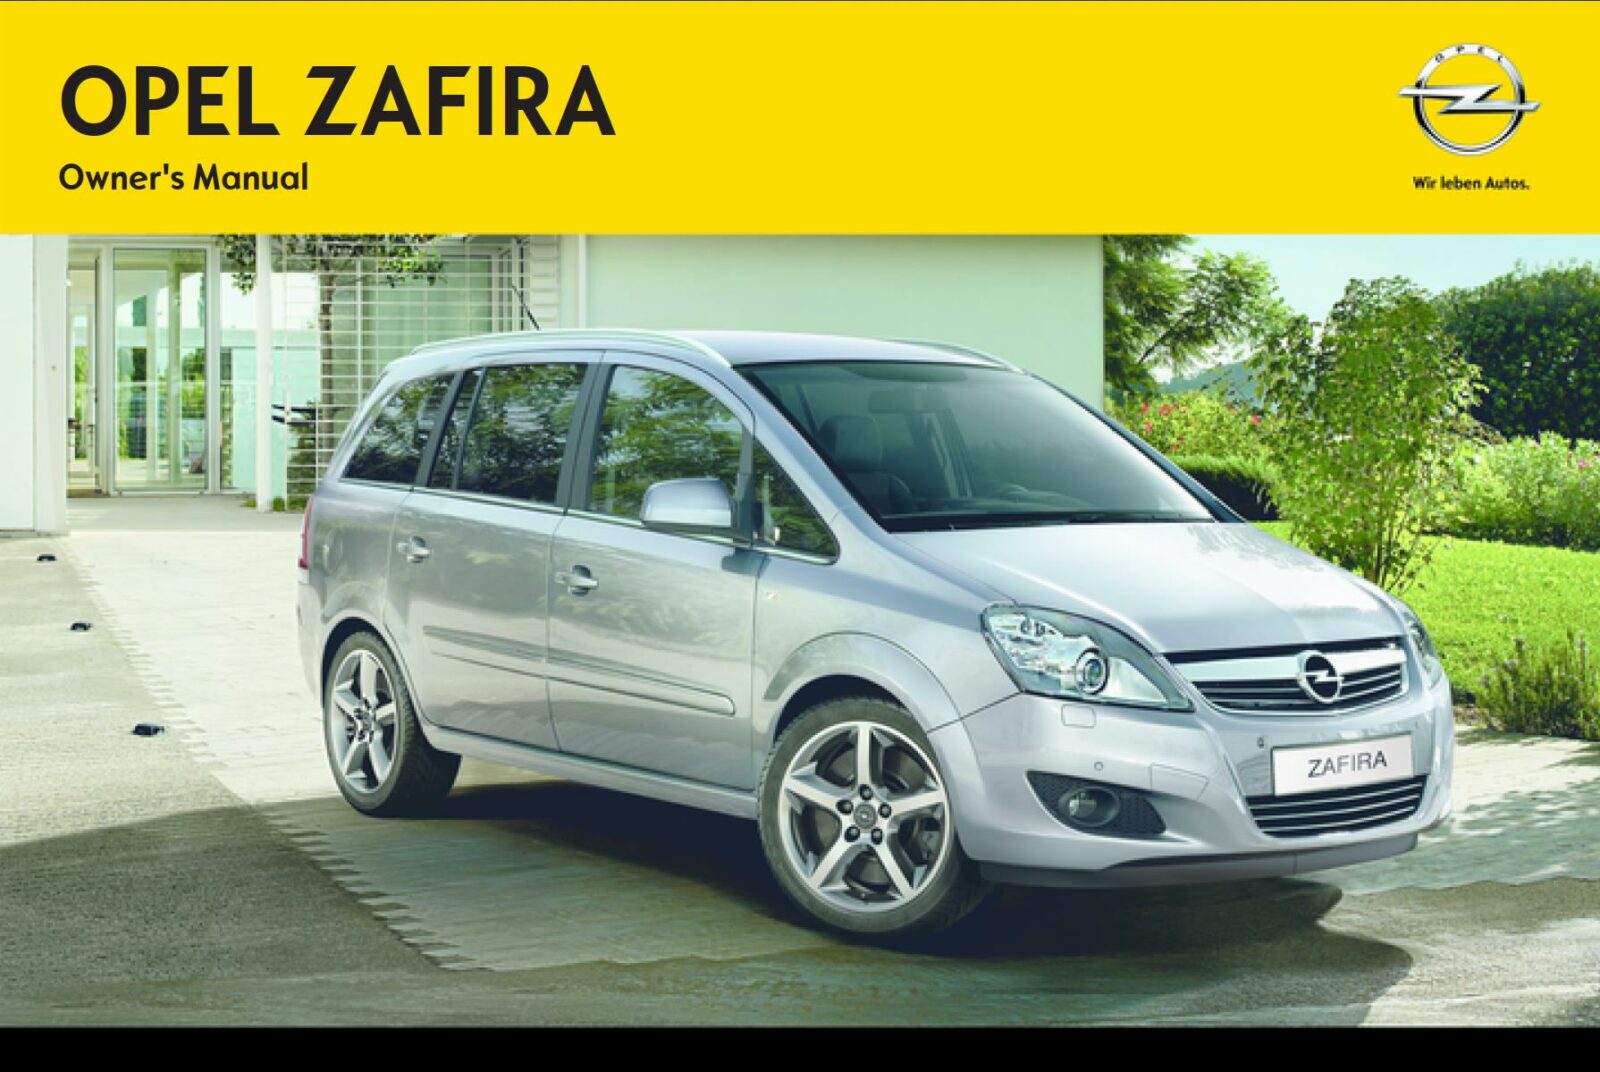 Opel Zafira 2015 Owner's Manual – PDF Download